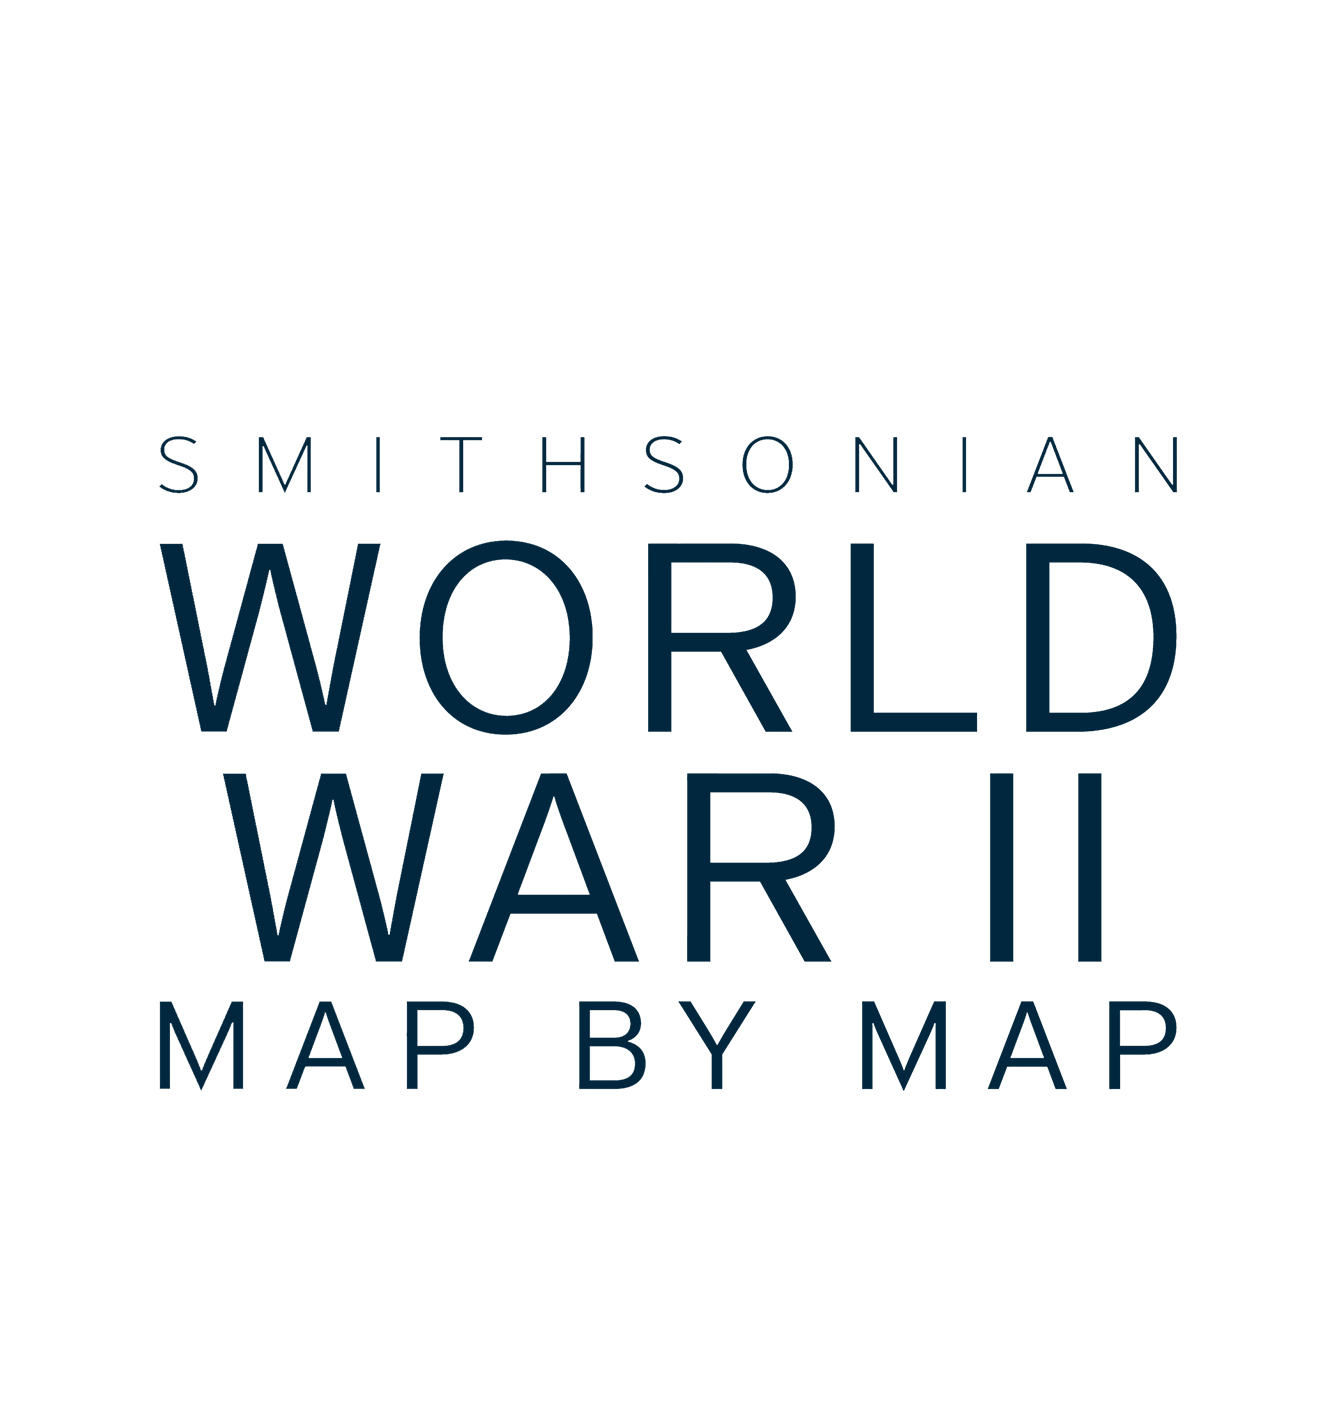 100 DETAILED MAPS CHART THE PROGRESS OF KEY EVENTS OF WORLD WAR II